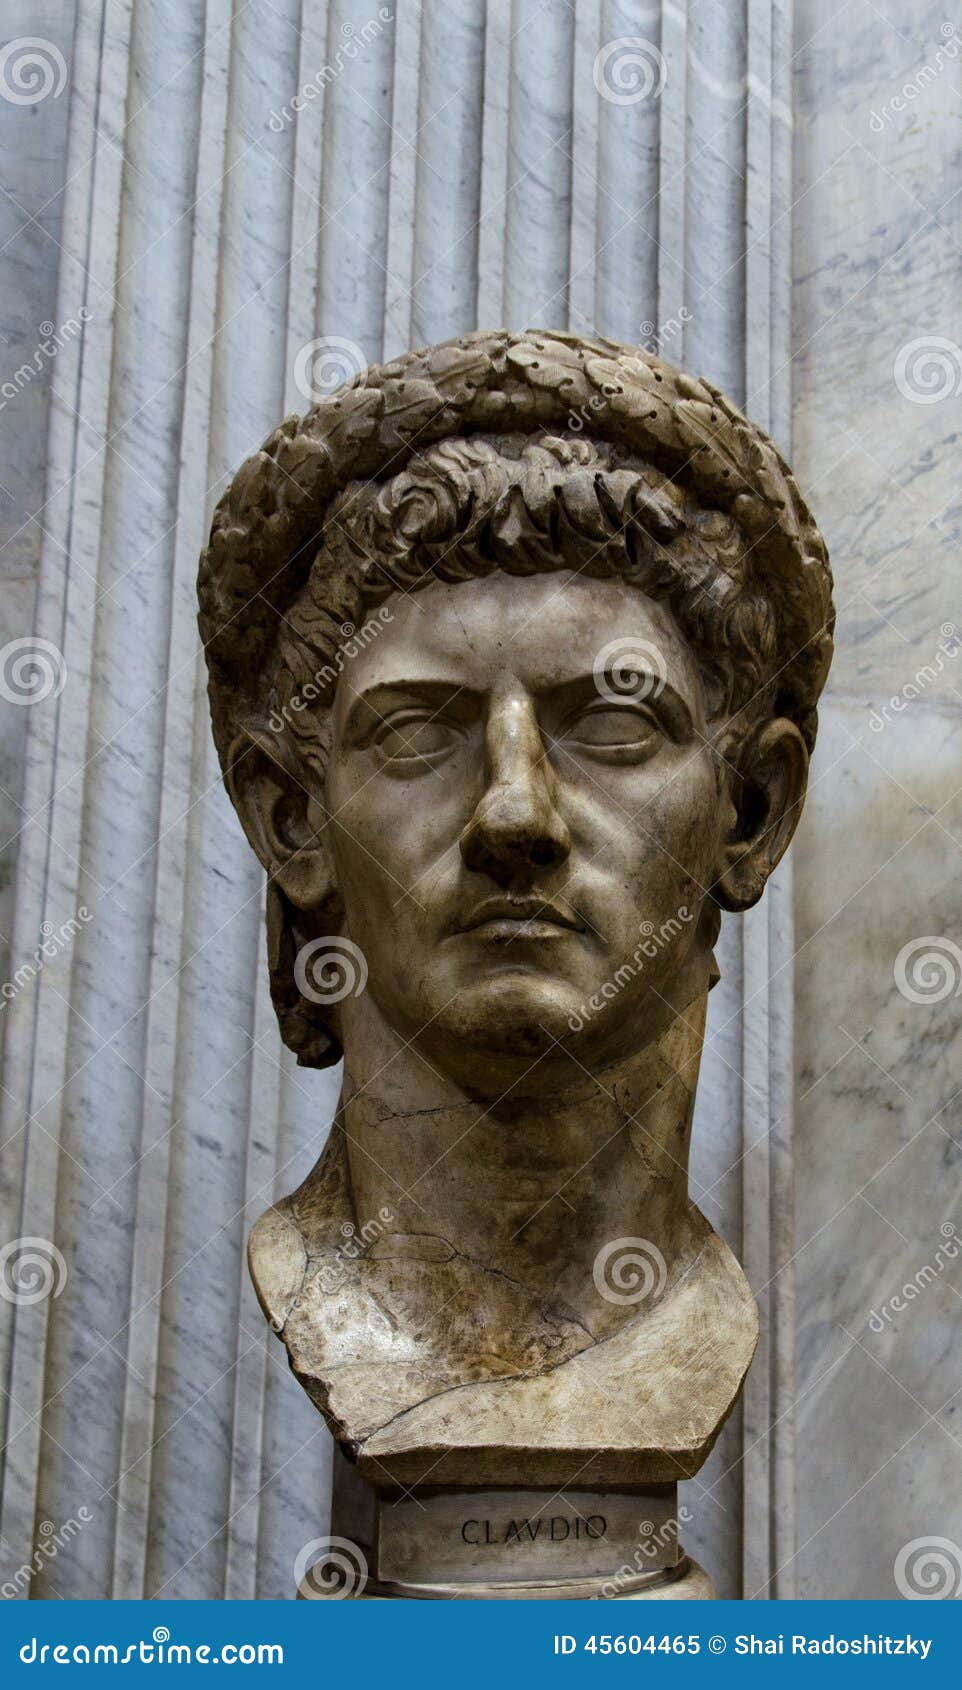 emperor claudius head statue